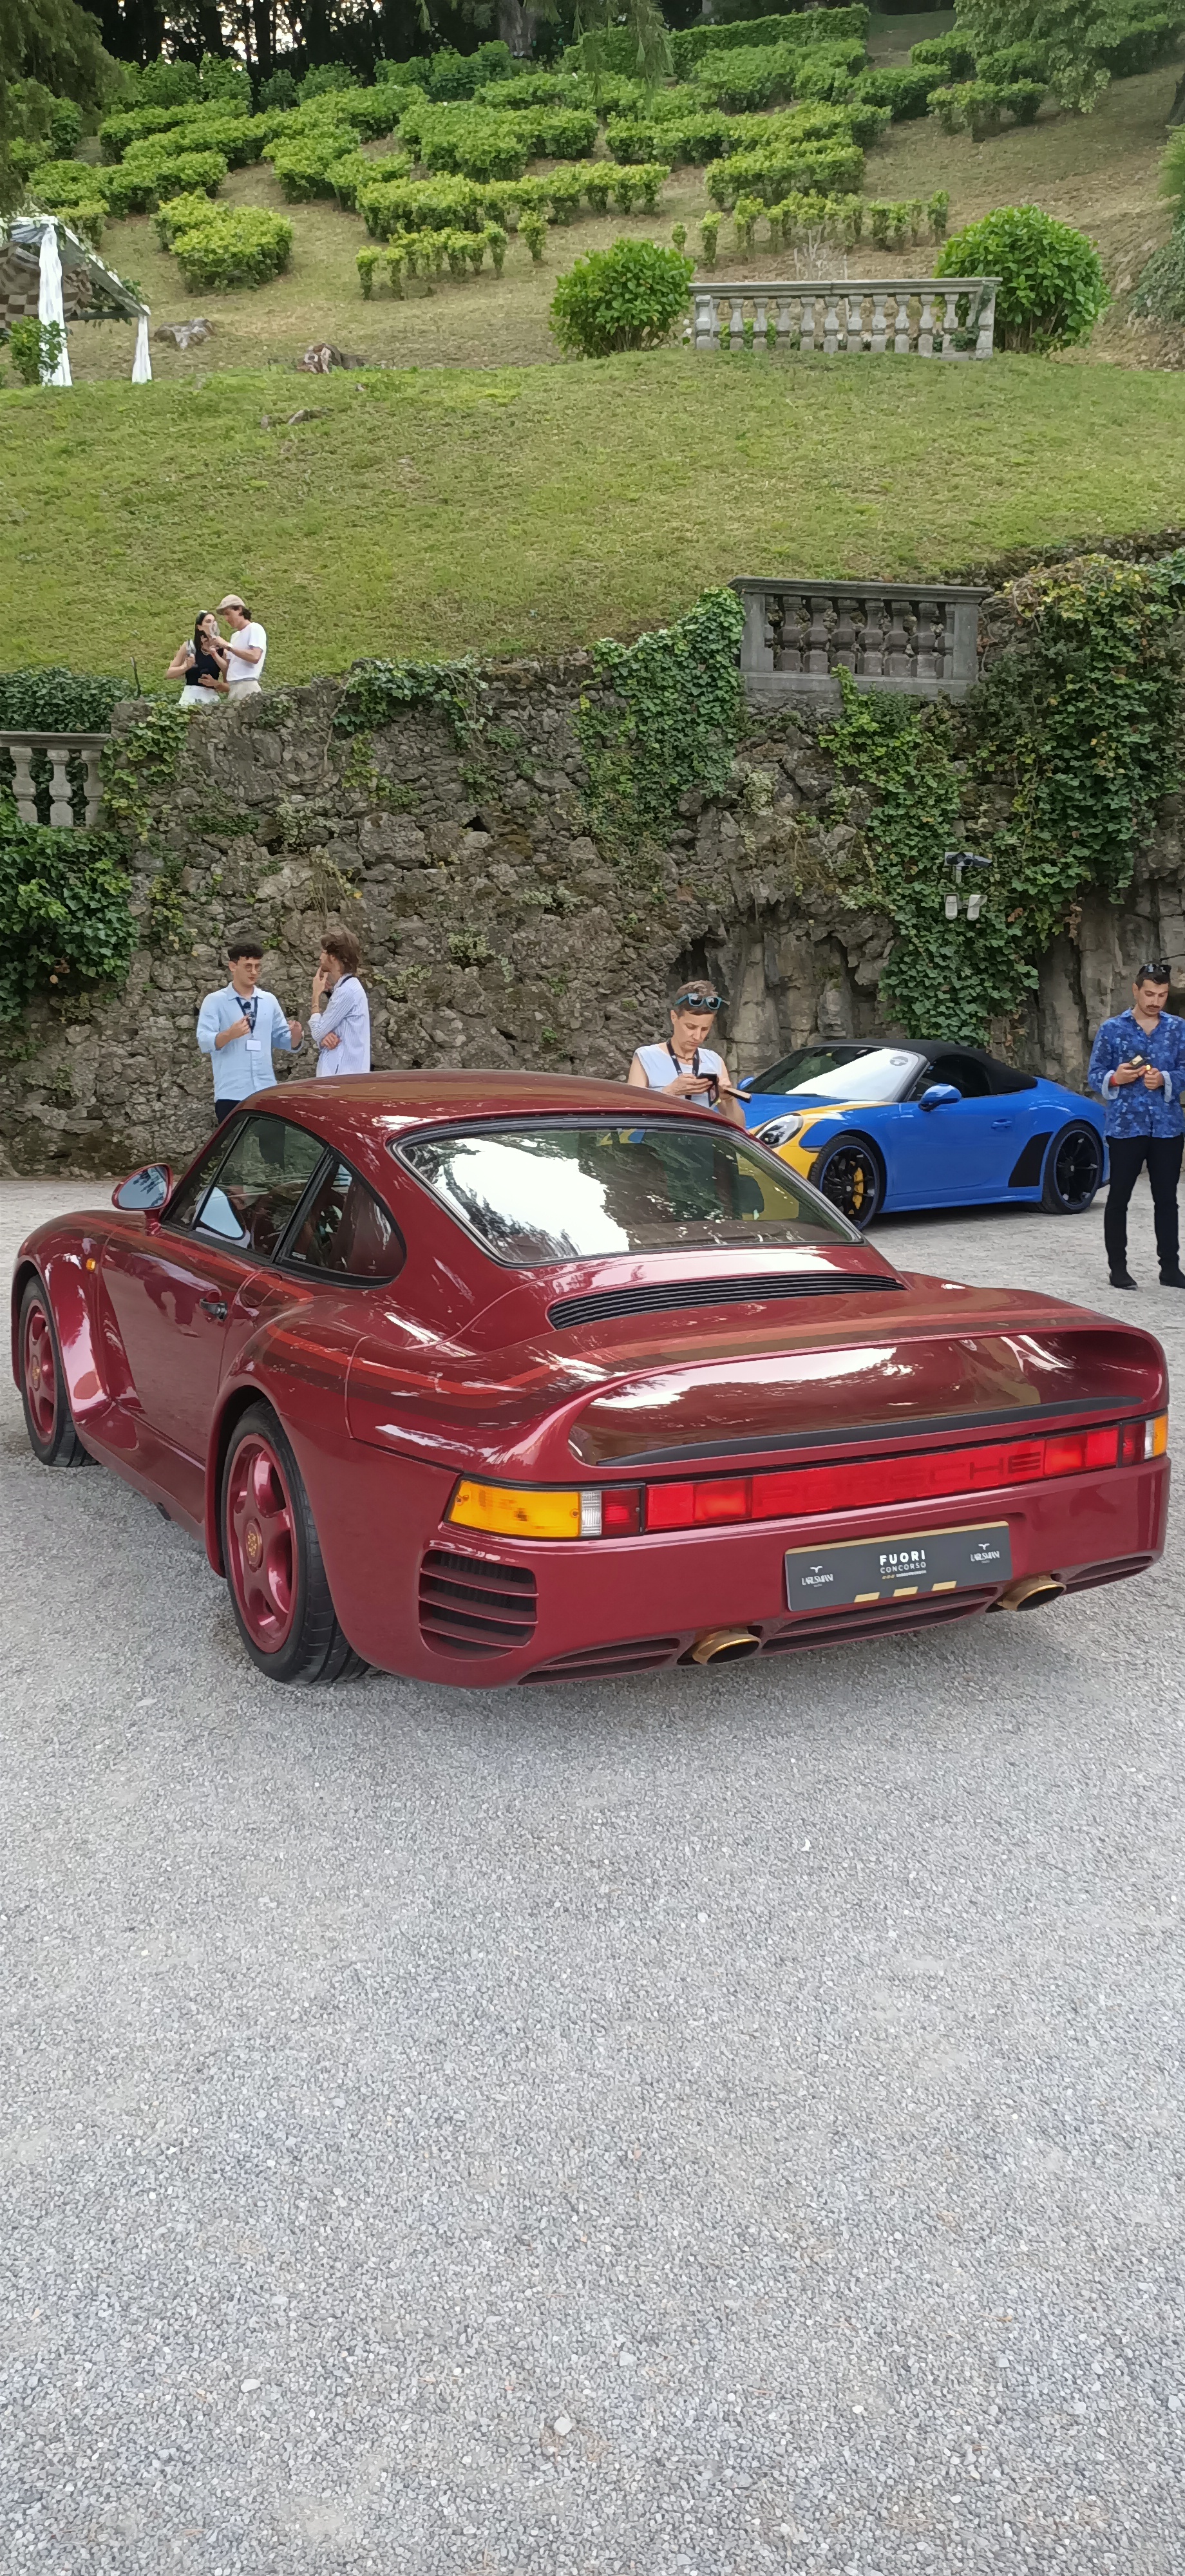 IMG20220521184919 SemanalClásico - Revista online de coches clásicos, de colección y sport - Porsche